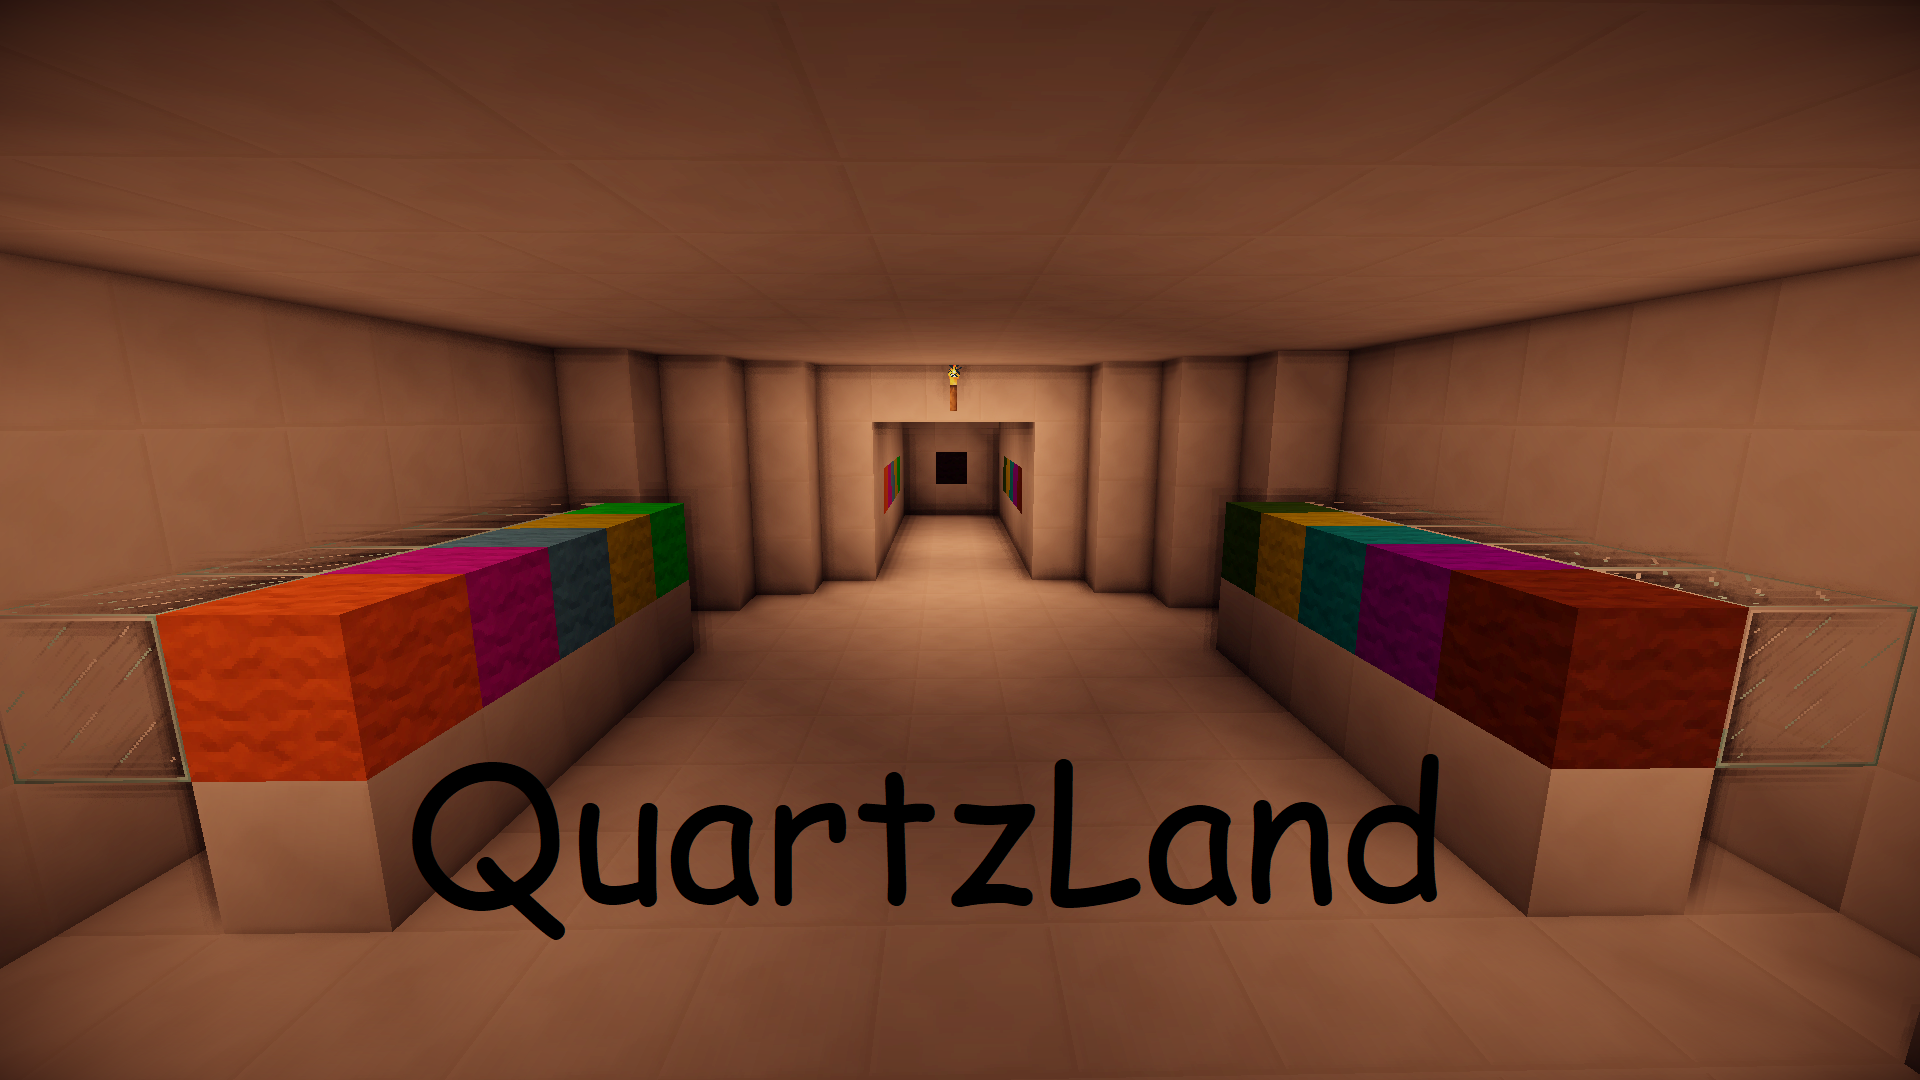 İndir QuartzLand için Minecraft 1.14.4